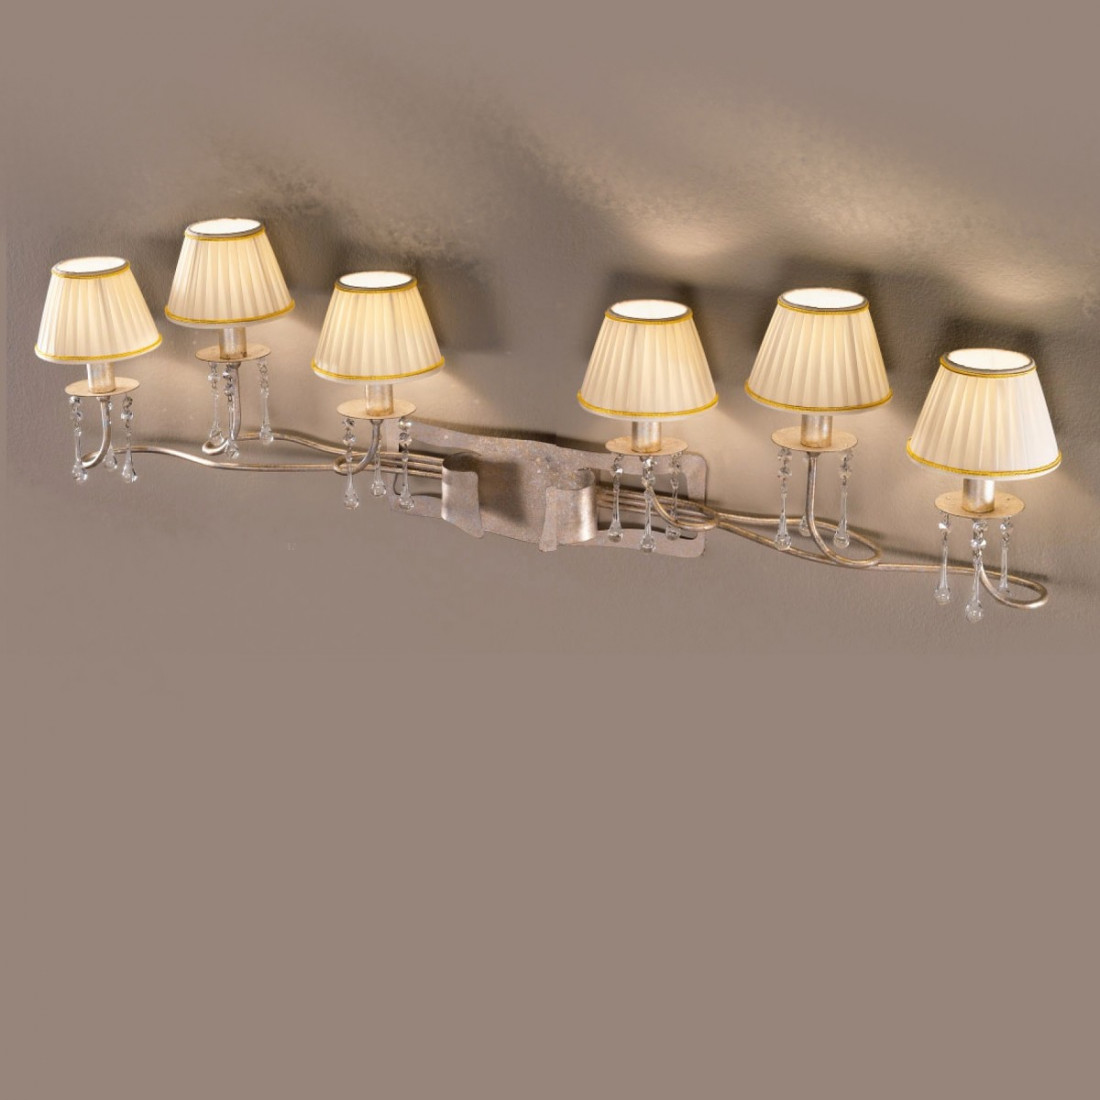 Applique FA-ATHENE AH34 E14 LED 6 luci metallo paralumi stoffa lampada parete classica elegante interno